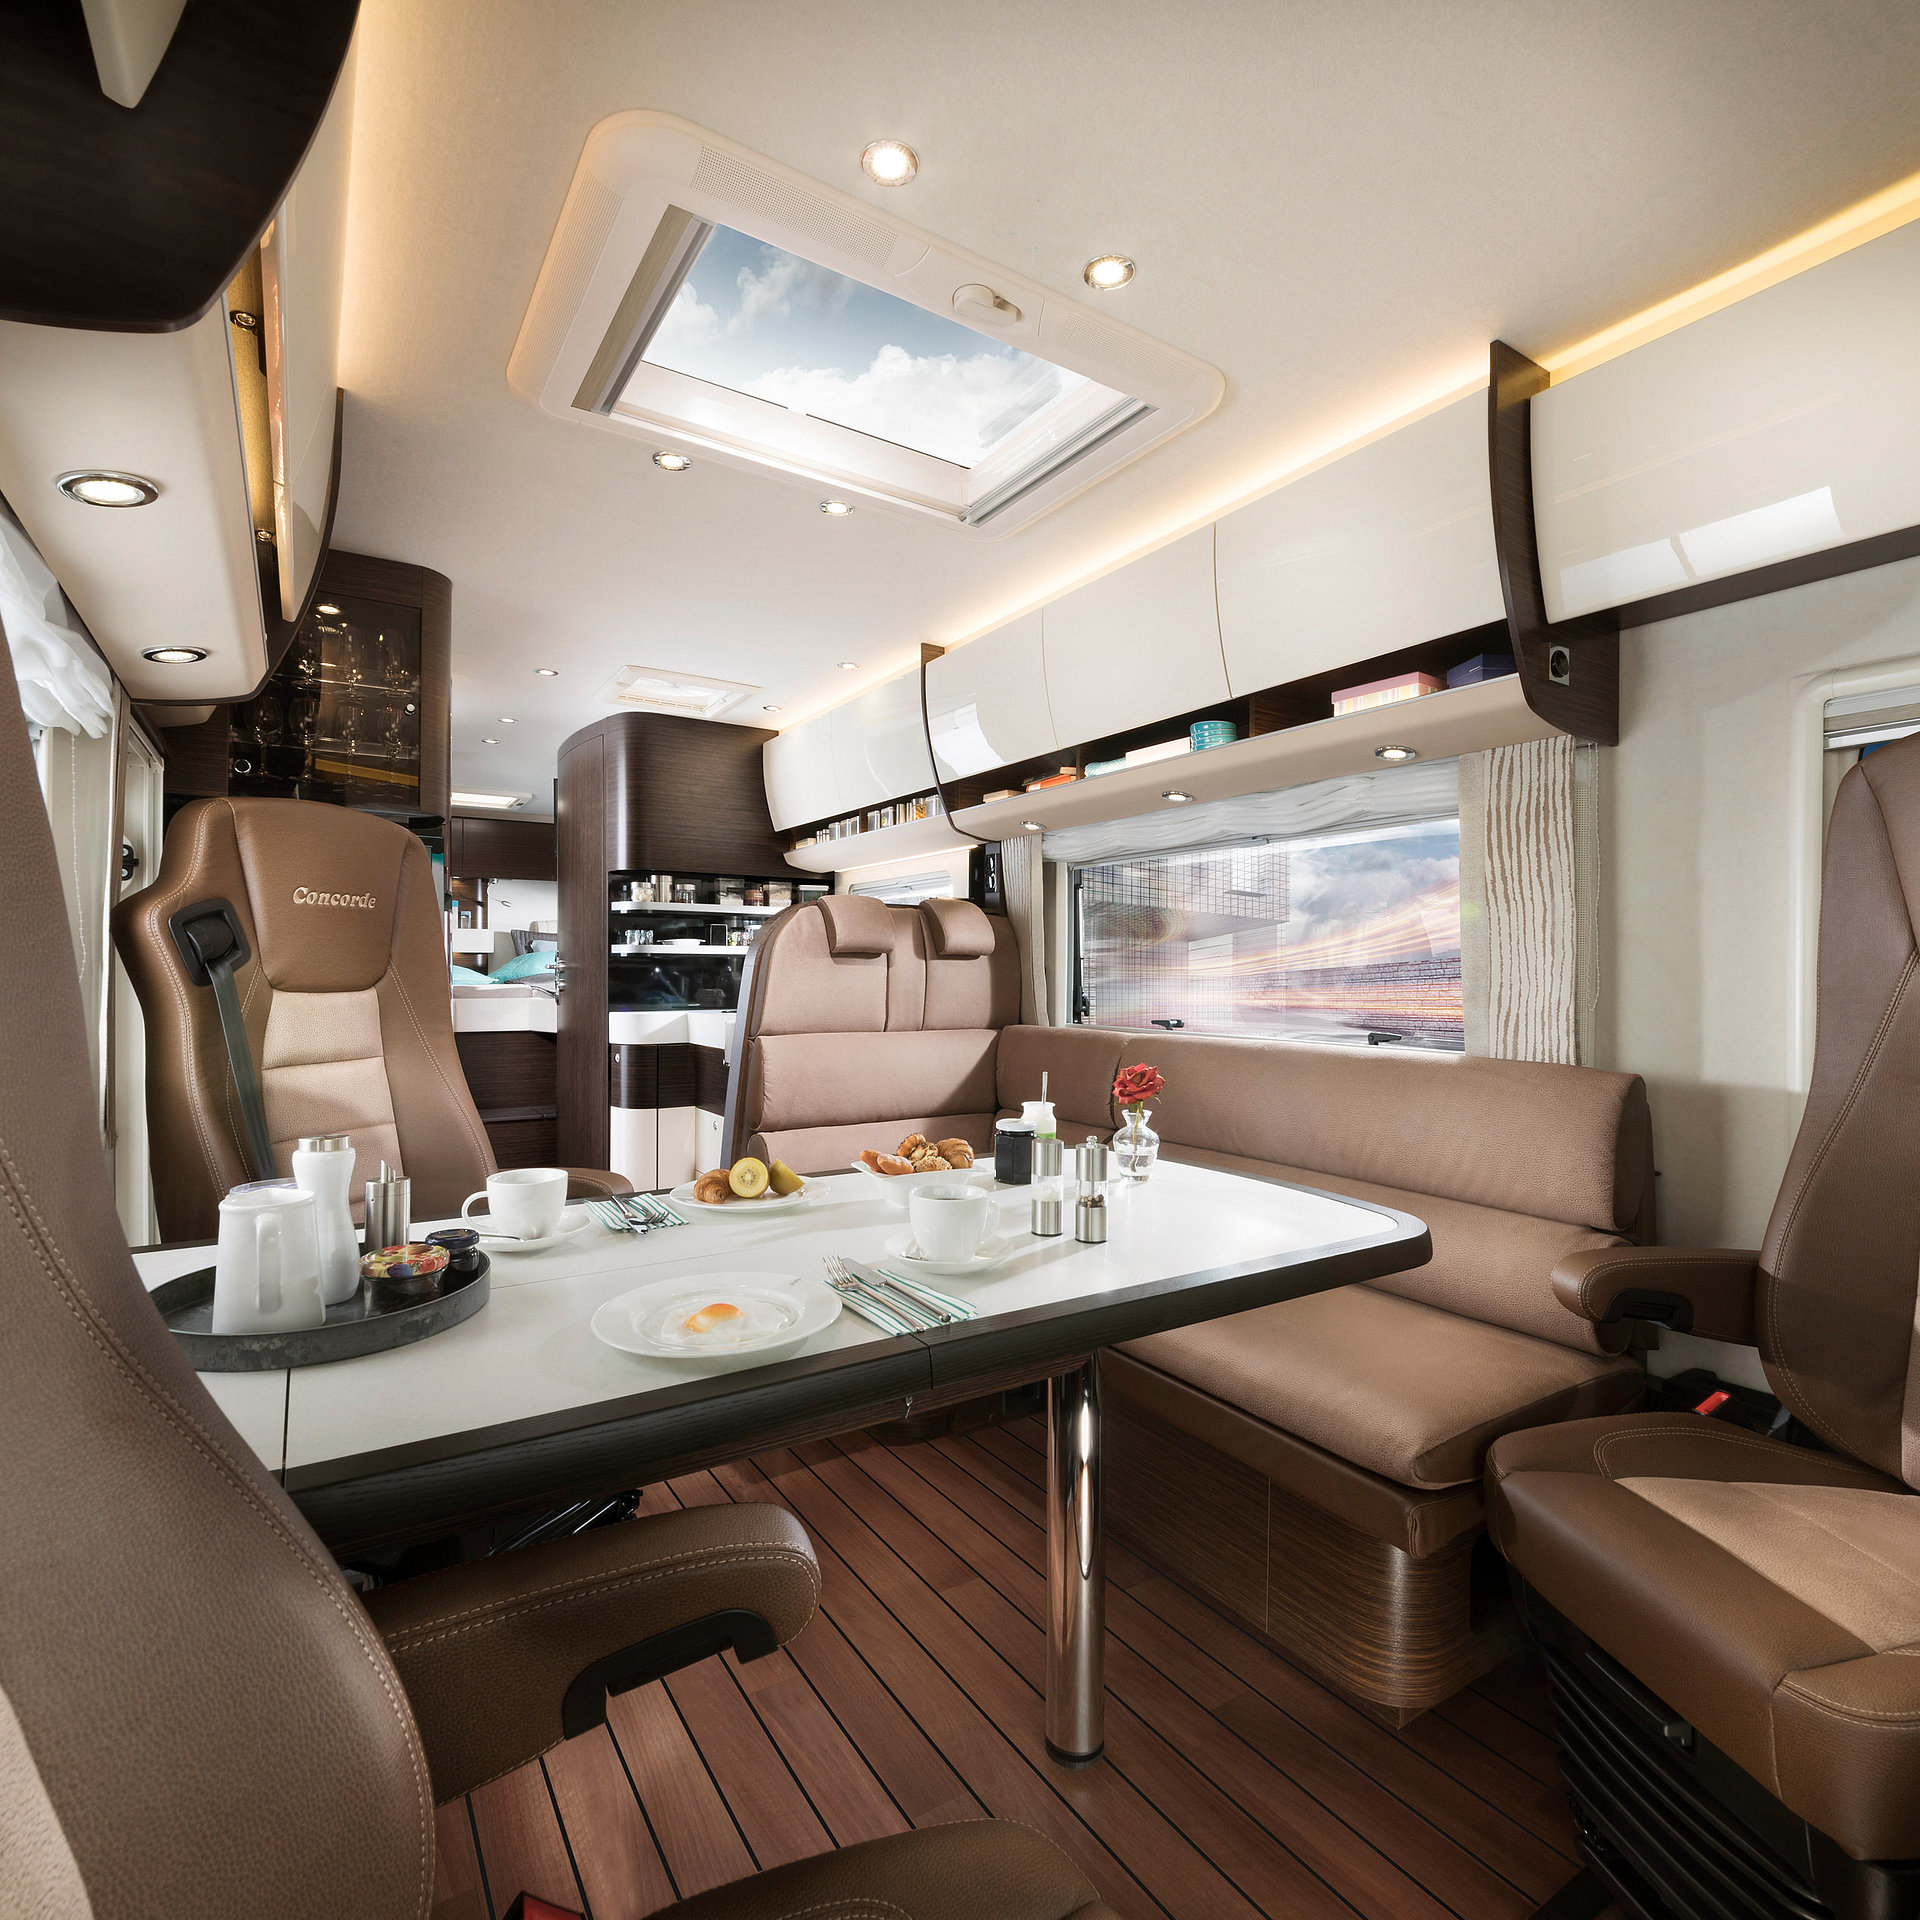 Luxury Class Concorde Interieur